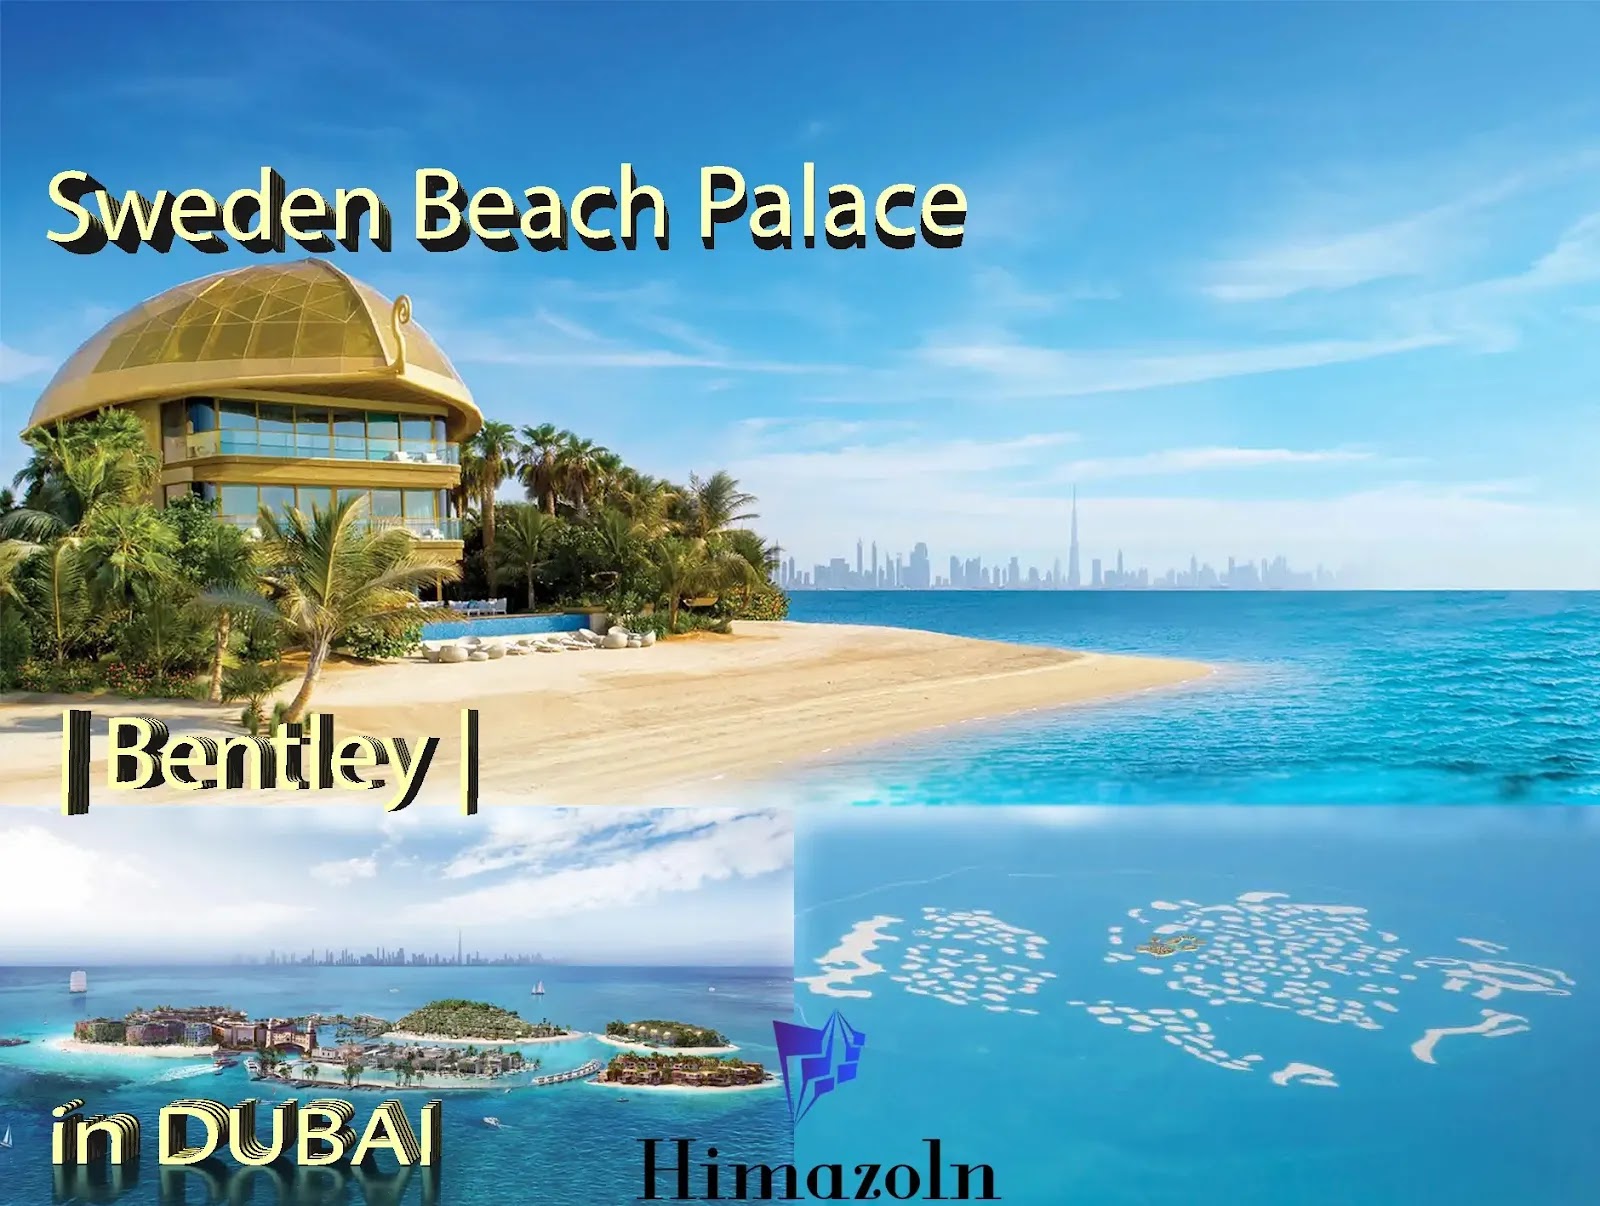 Sweden Beach Palace | Bentley | in DUBAI